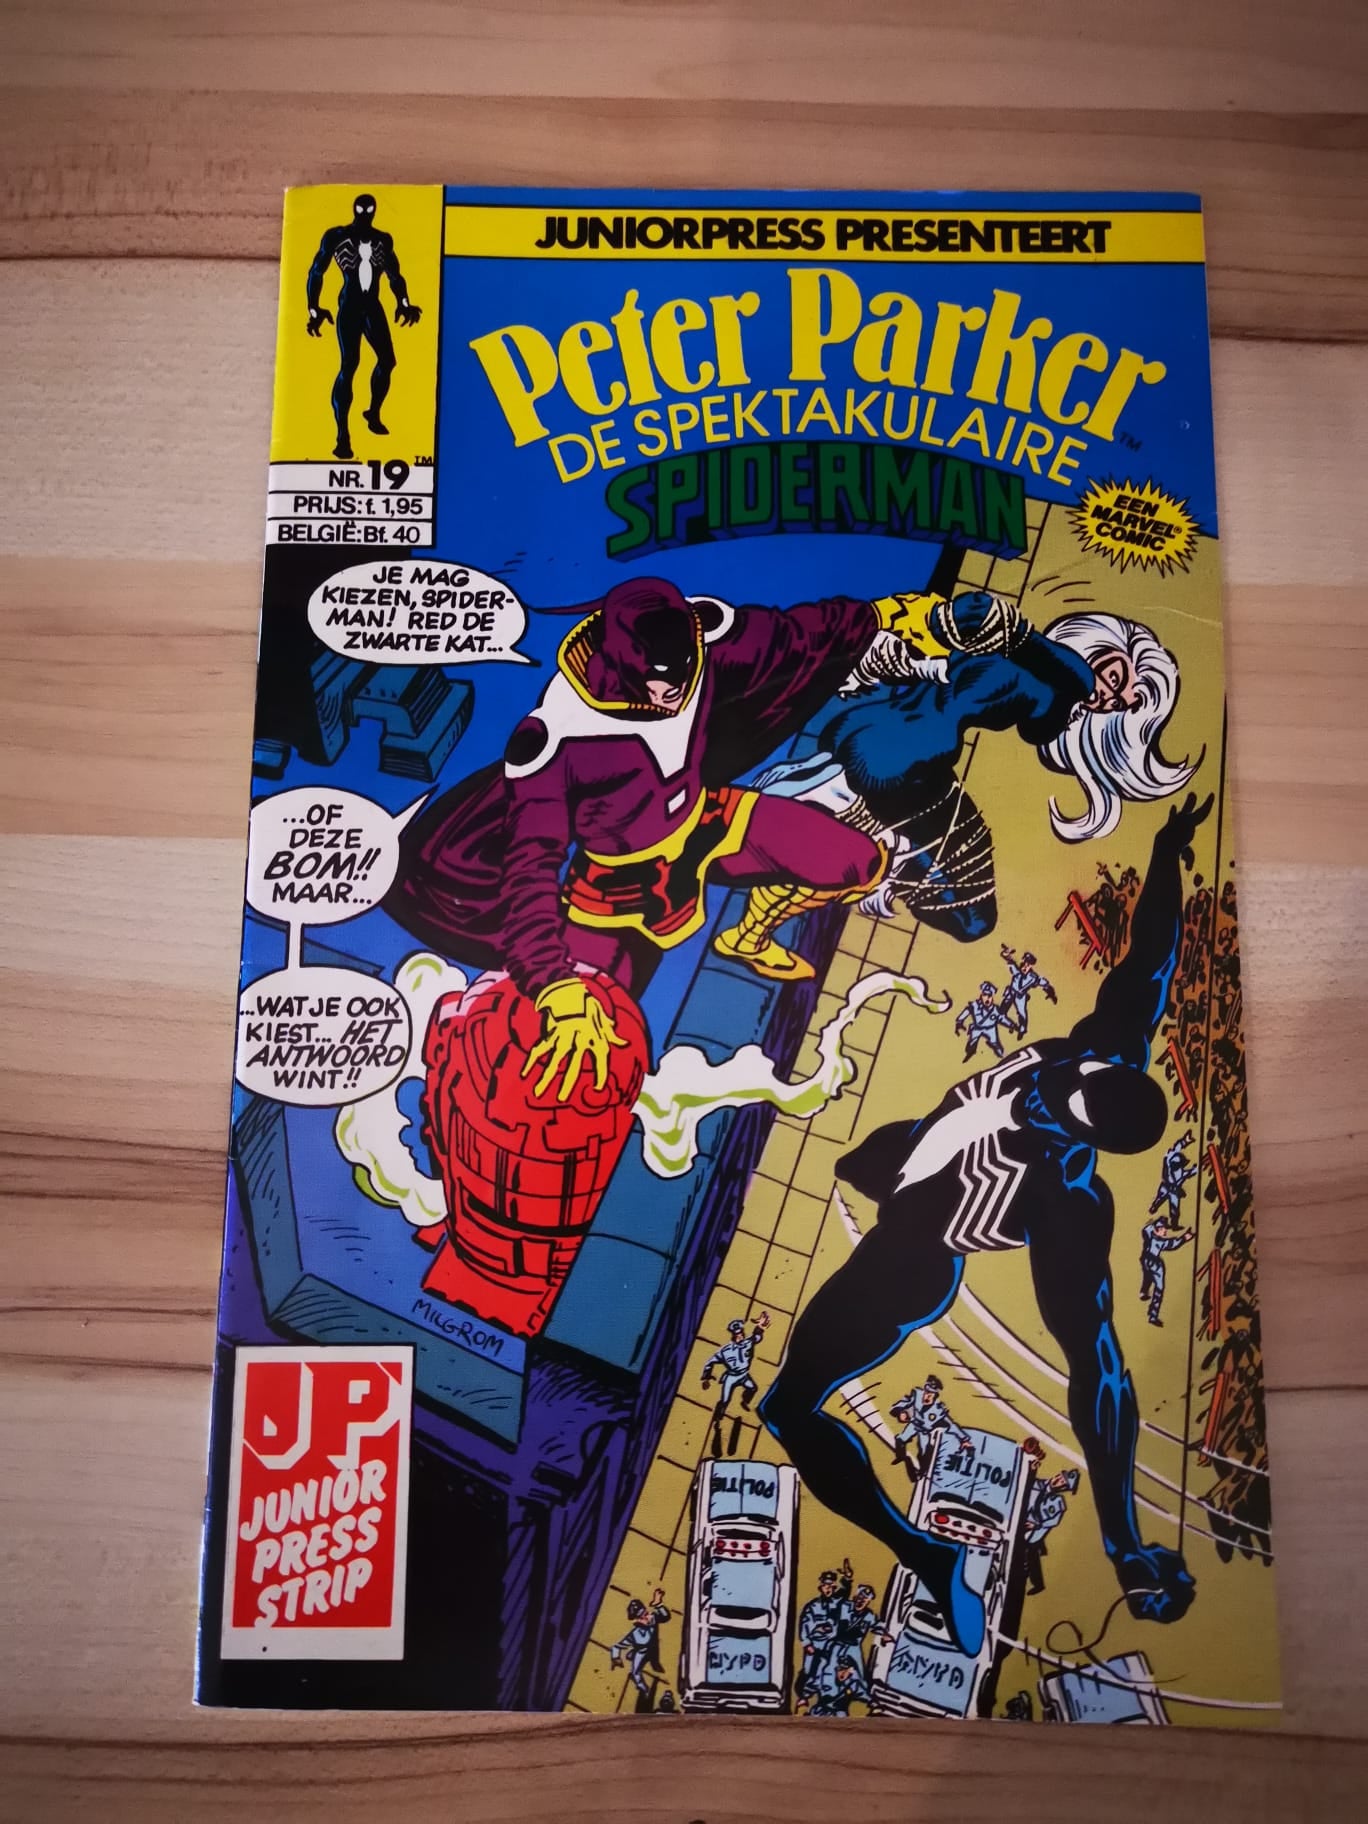 Peter Parker De spektakulaire spiderman #19